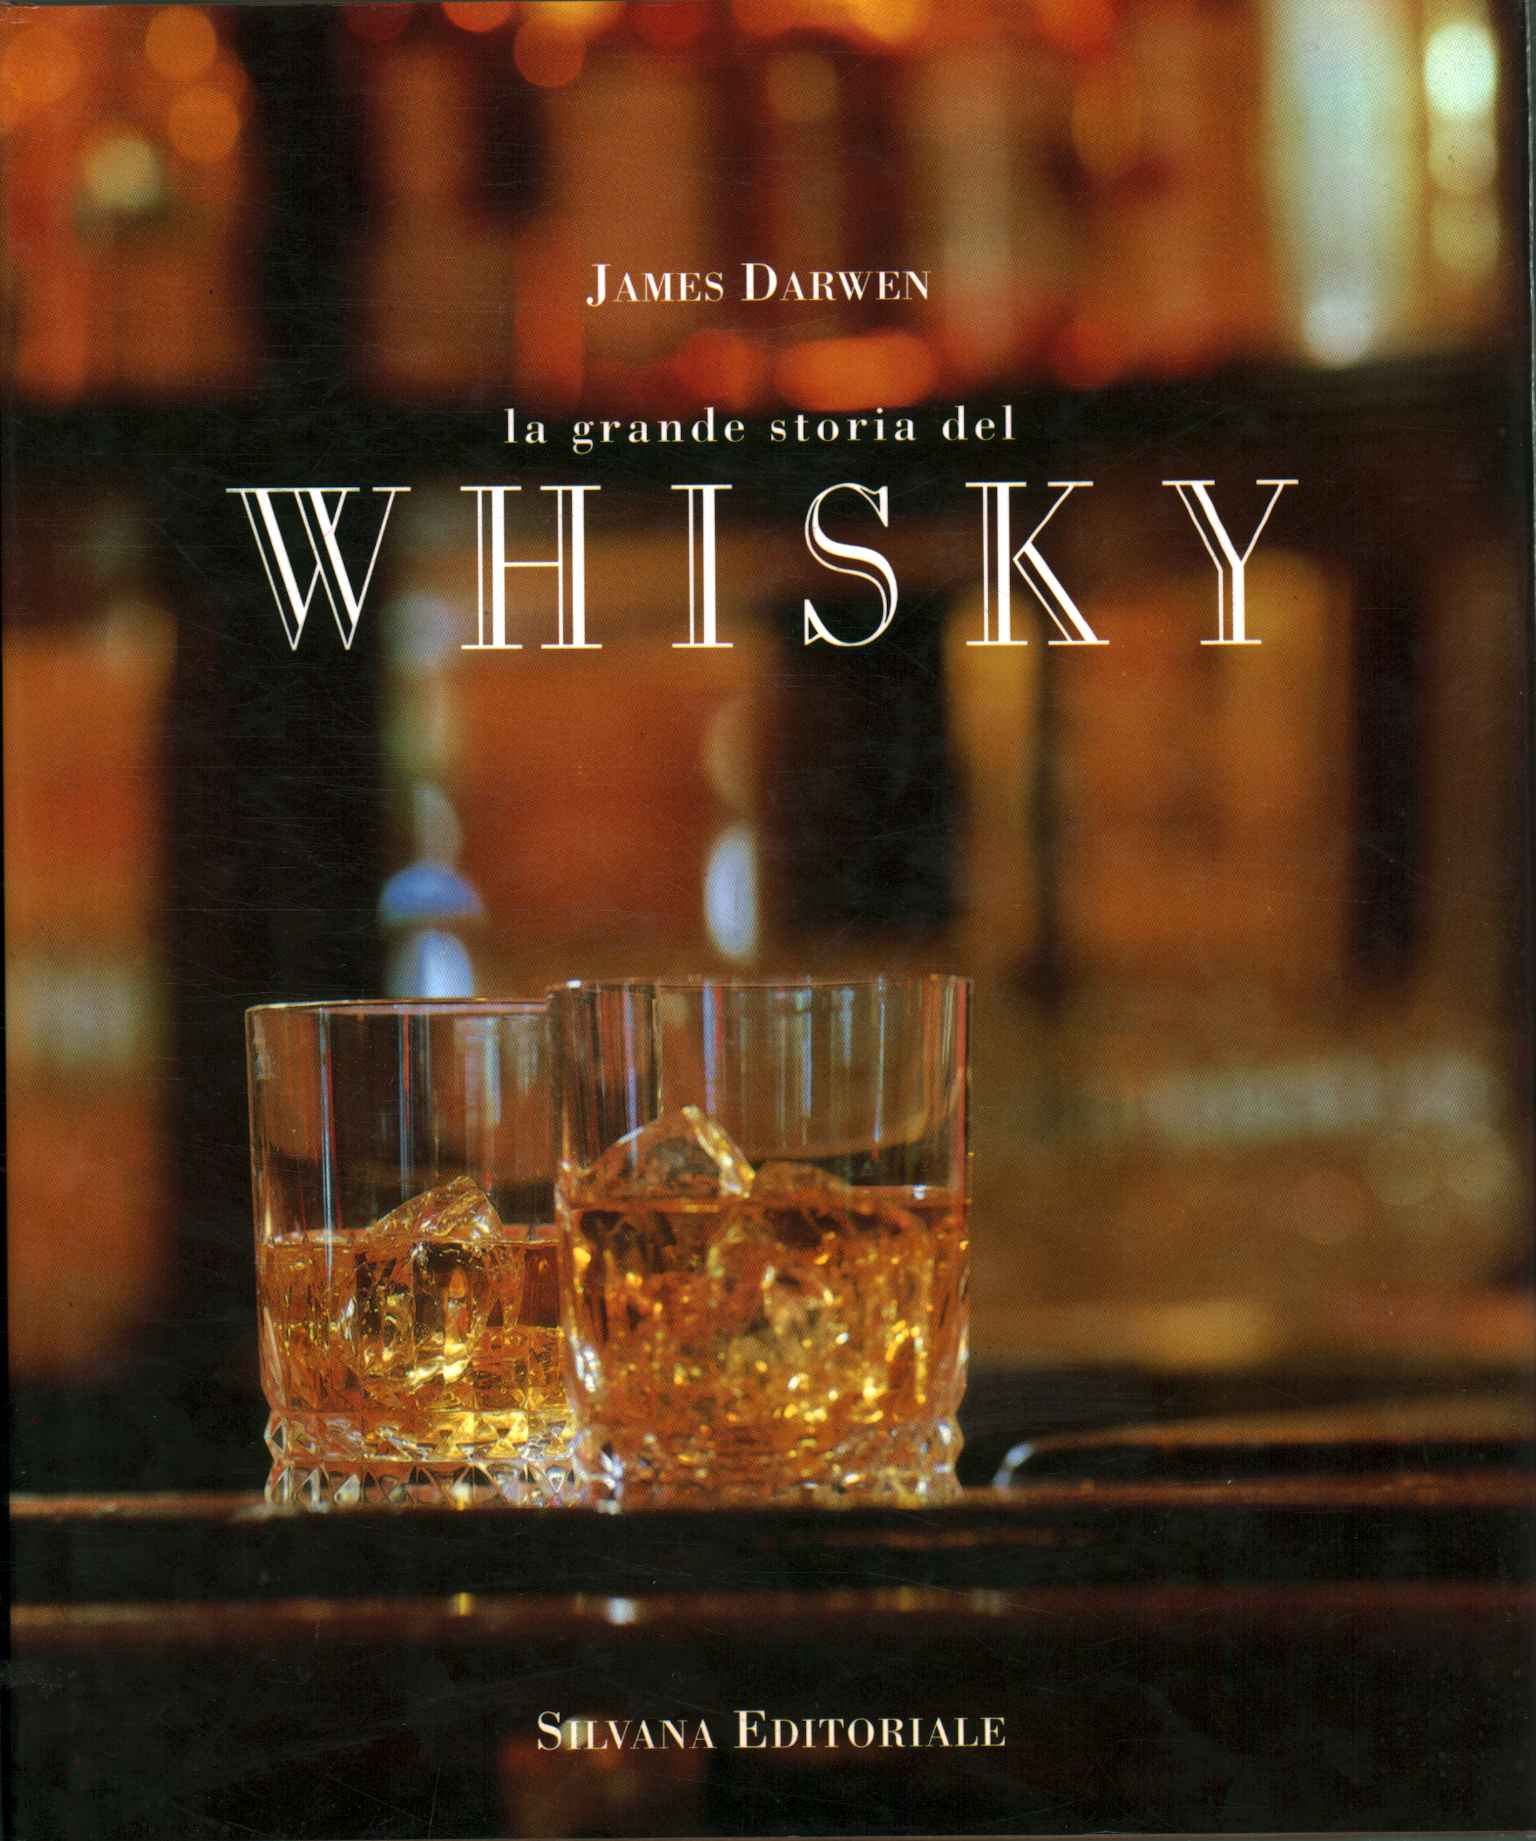 La gran historia del Whisky